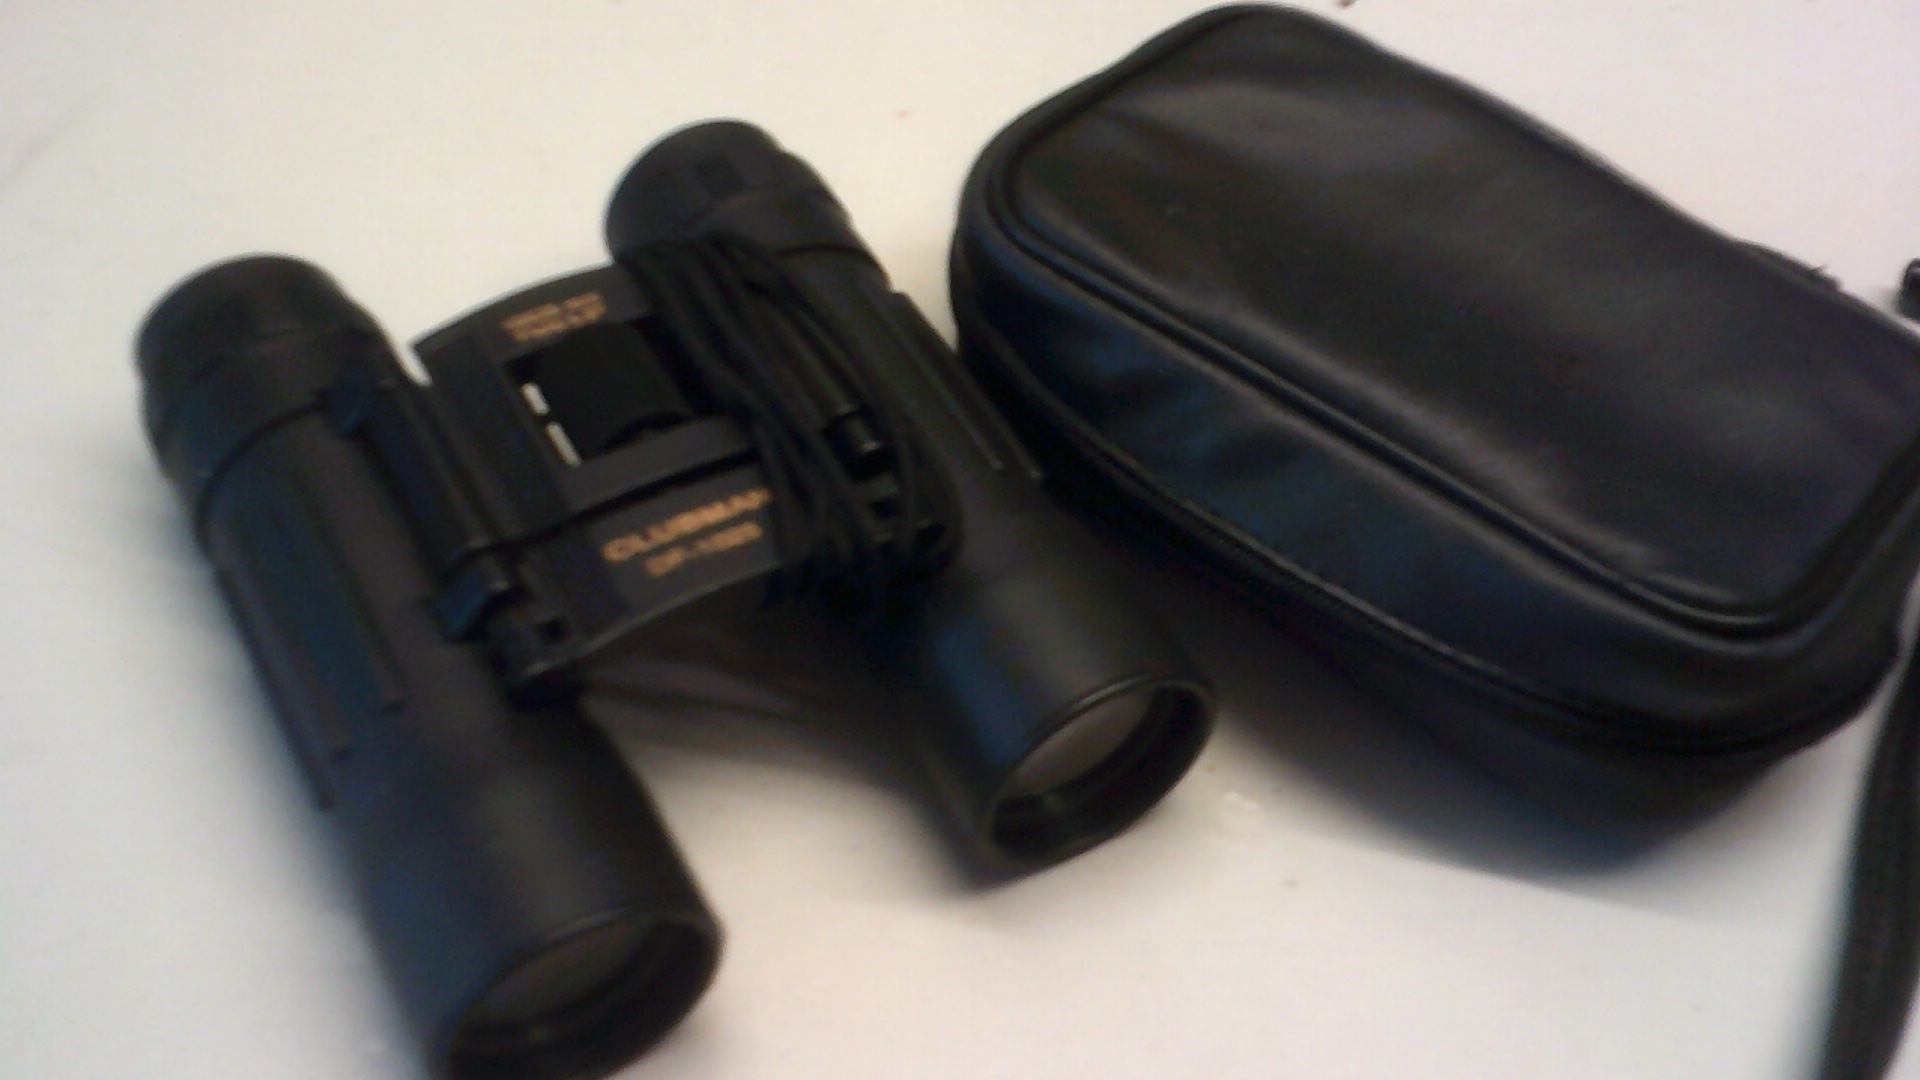 Binoculars-Rubberised Clubman field Binoculars-DF1025, 10x 25mm in case - Image 2 of 2